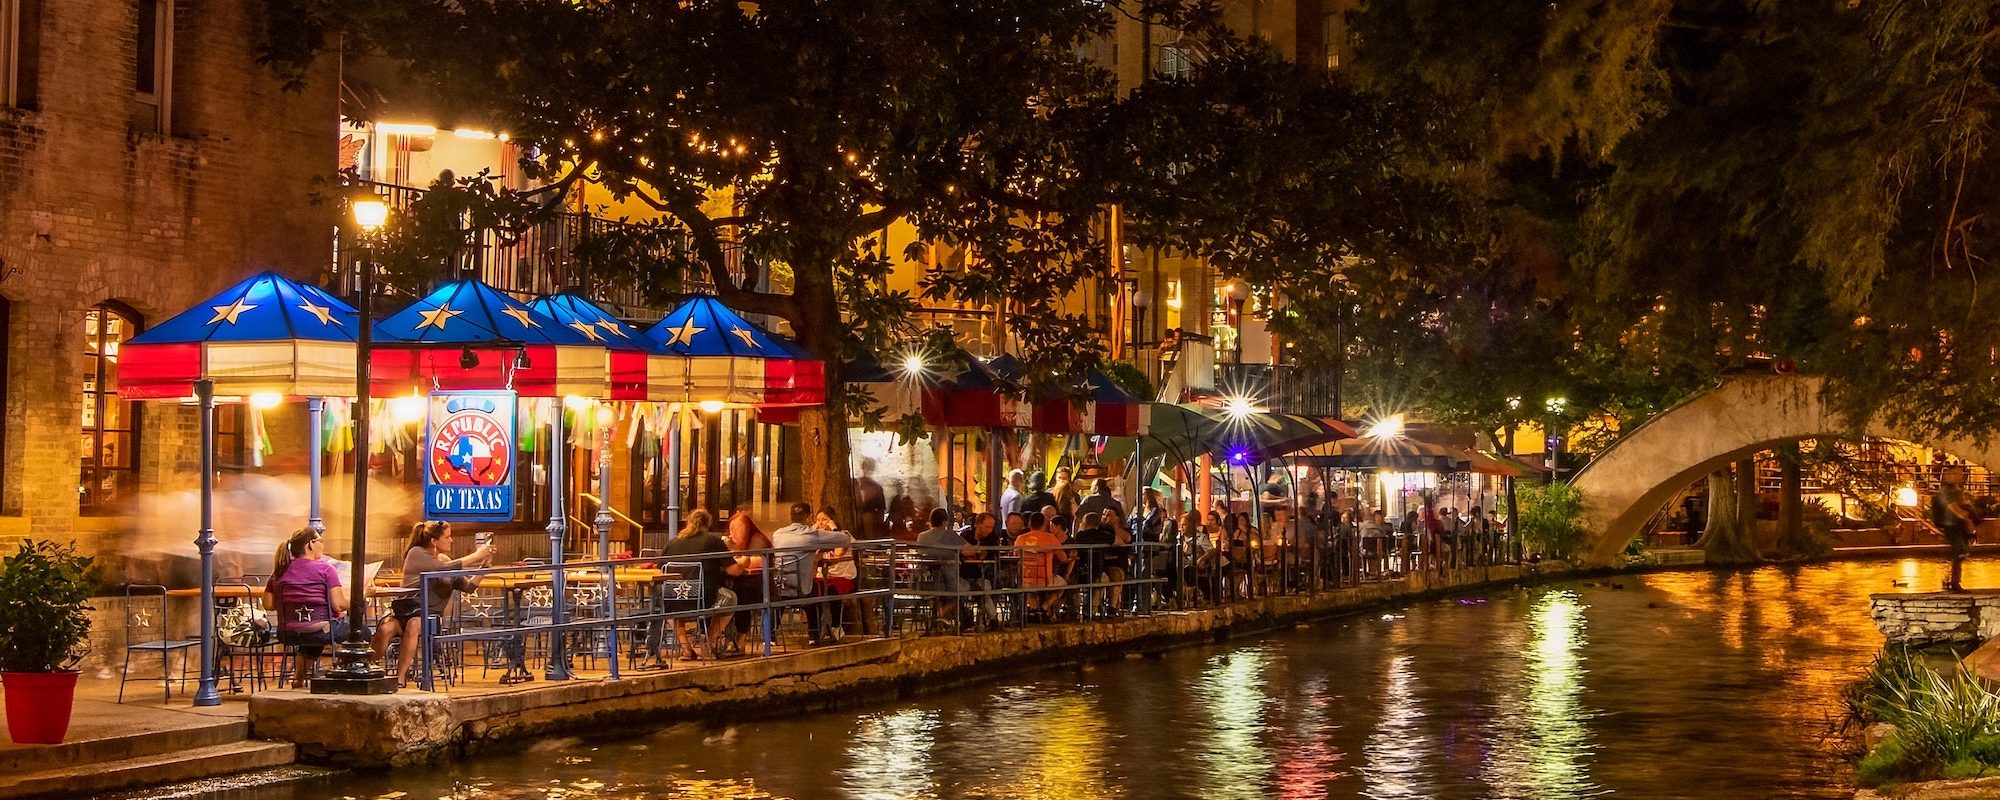 San Antonio Riverwalk by Stephen Crane